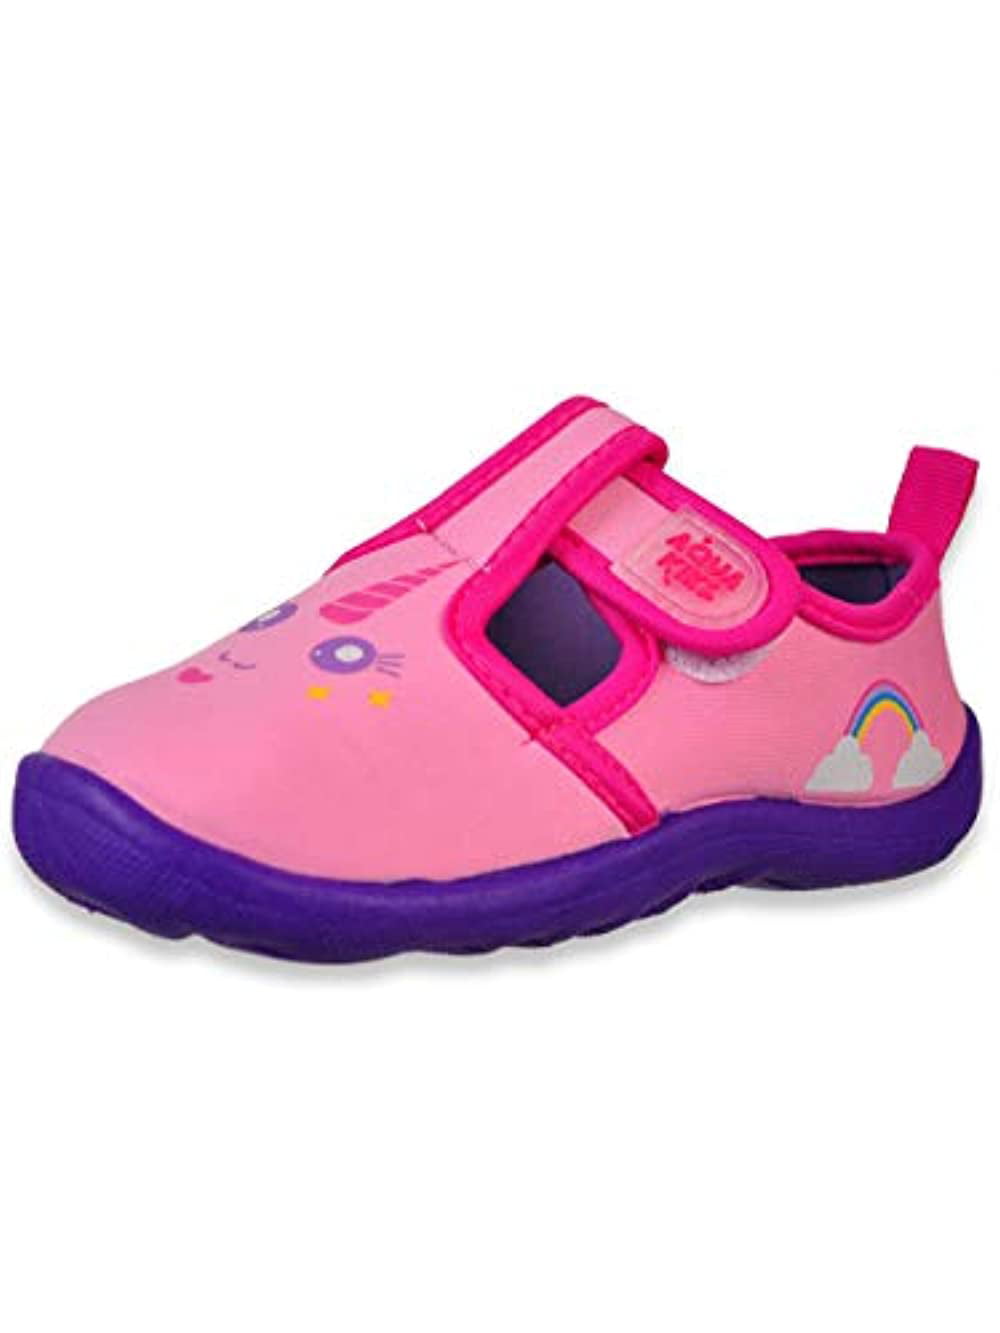 Aquakiks Girls Water Shoes 2 Pack Non-Slip Quick Dry Waterproof Aqua Shoes Toddler//Little Kid//Big Kid